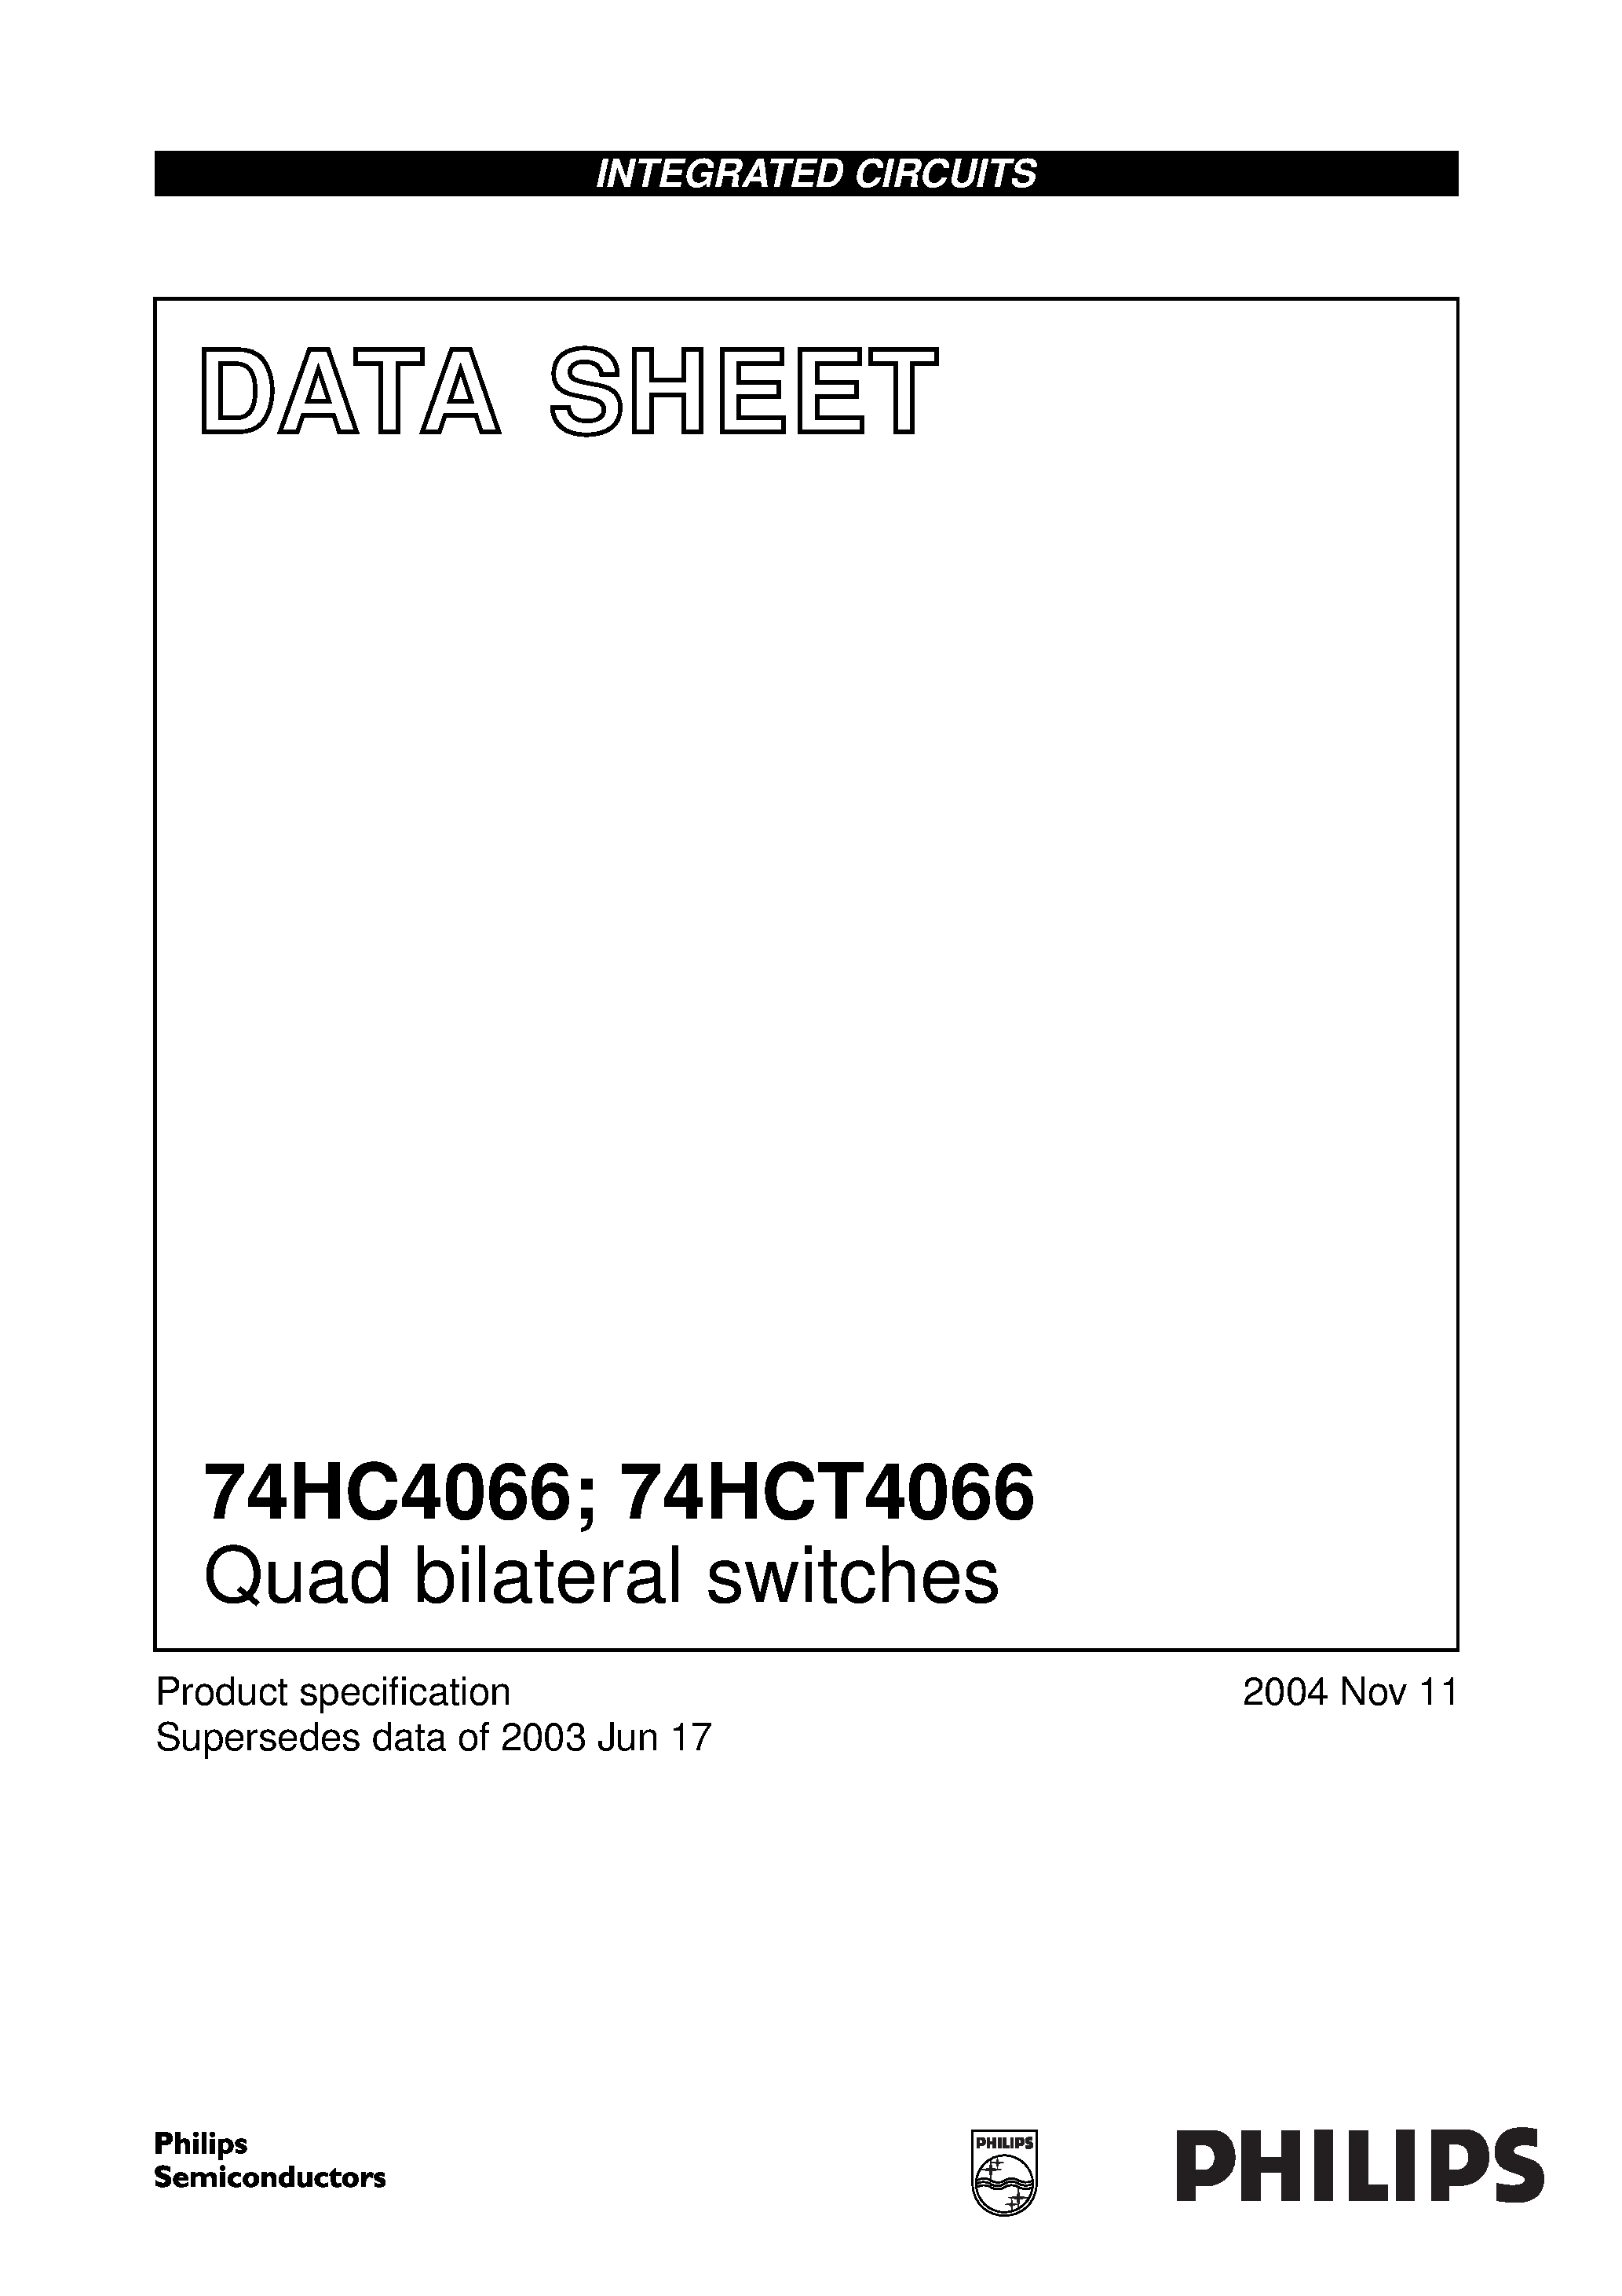 Datasheet 74HC4066BQ - (74HC4066x) Quad bilateral switches page 1